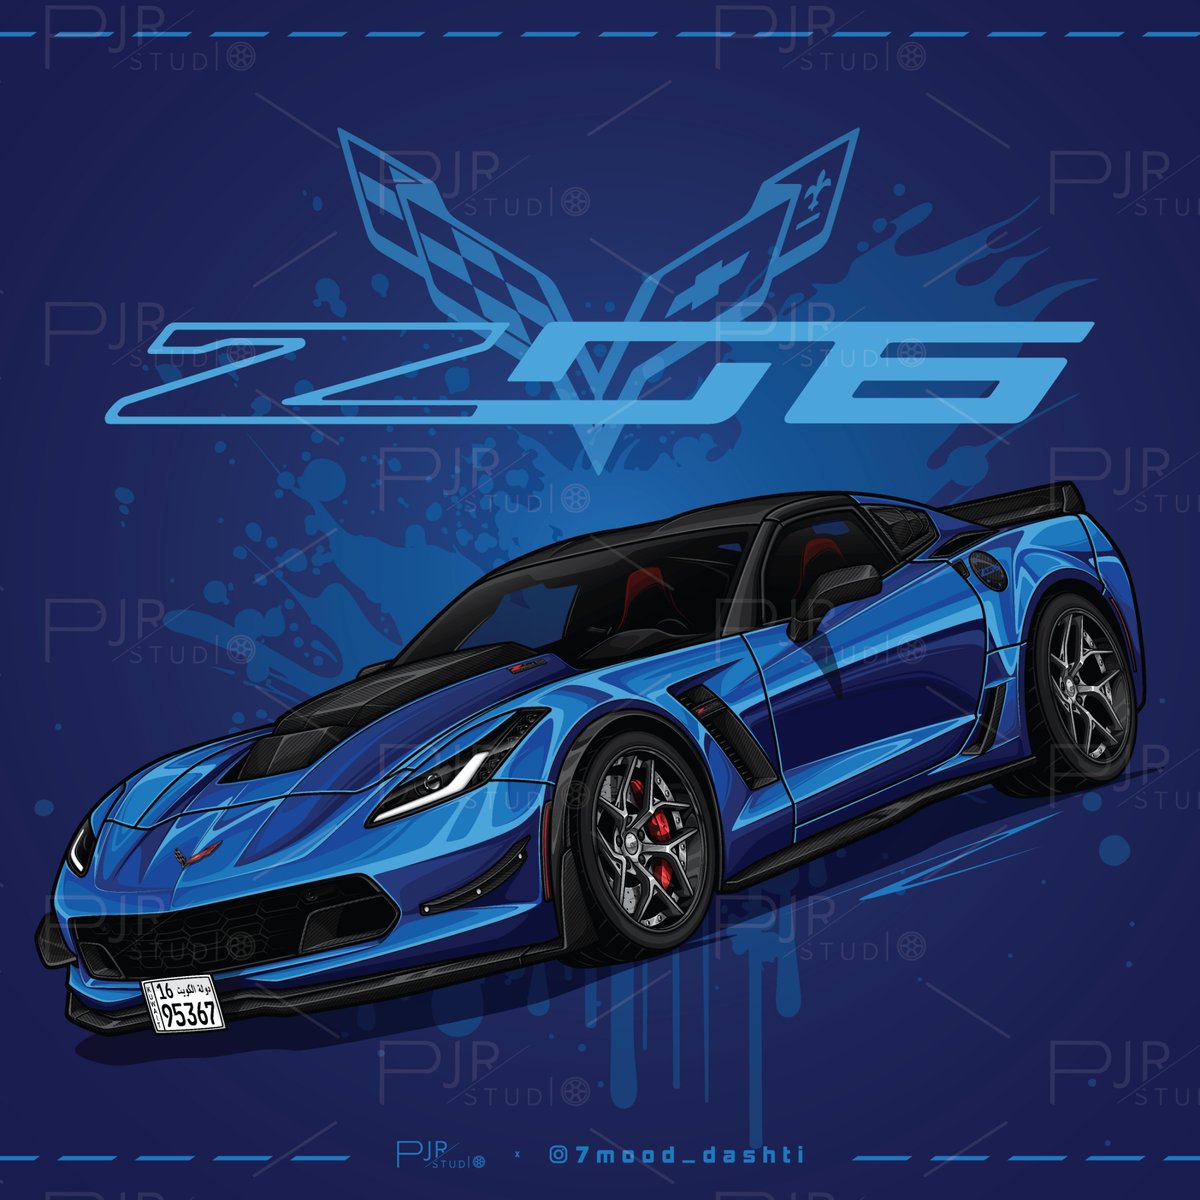 Sonic Supra 📷Full Carbon Z06📷
IG : 7mood_dashti
.
Etsy Shop : etsy.com/shop/PjrStudio
Redbubble Shop : pjrstudio.redbubble.com
.
#corvette #corvettec7 #corvettelifestyle #corvettestingray #chevycorvette #c7z06 #c7corvette #c7 #c7stingray
#musclecar #stancenation #stancedaily